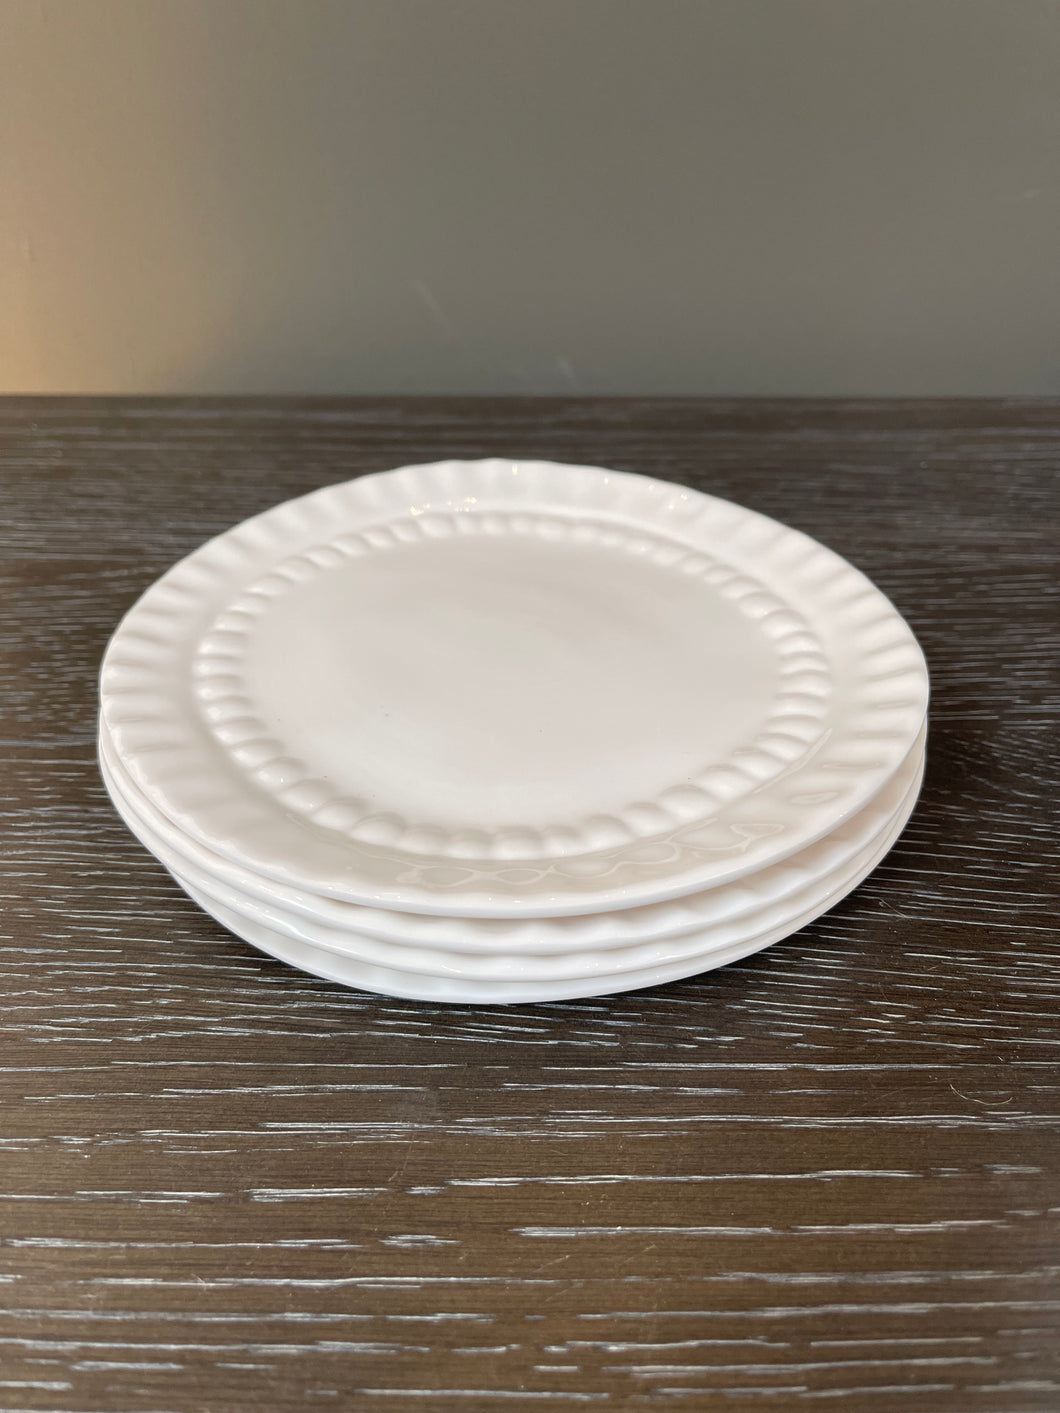 Canape plates